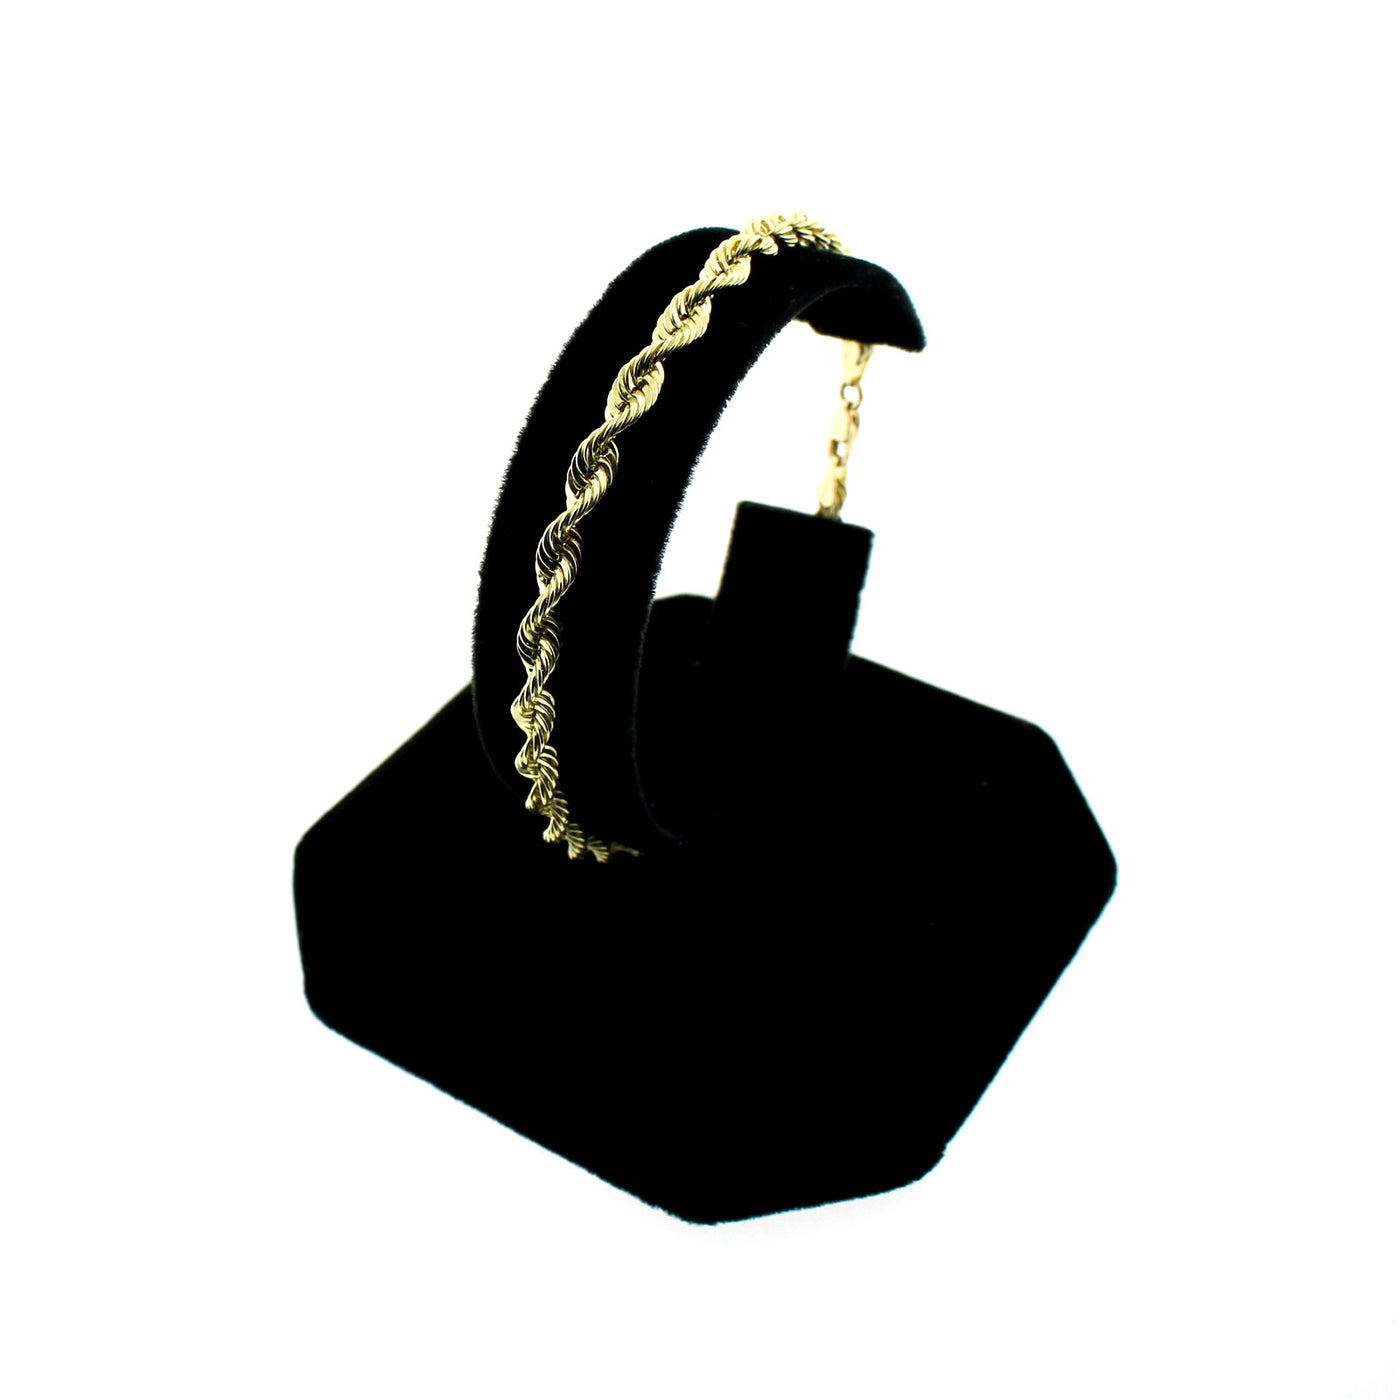 Real 10K Yellow Gold 2mm Rope Chain Bracelet Anklet Men Women 7" 8" 9" 10"